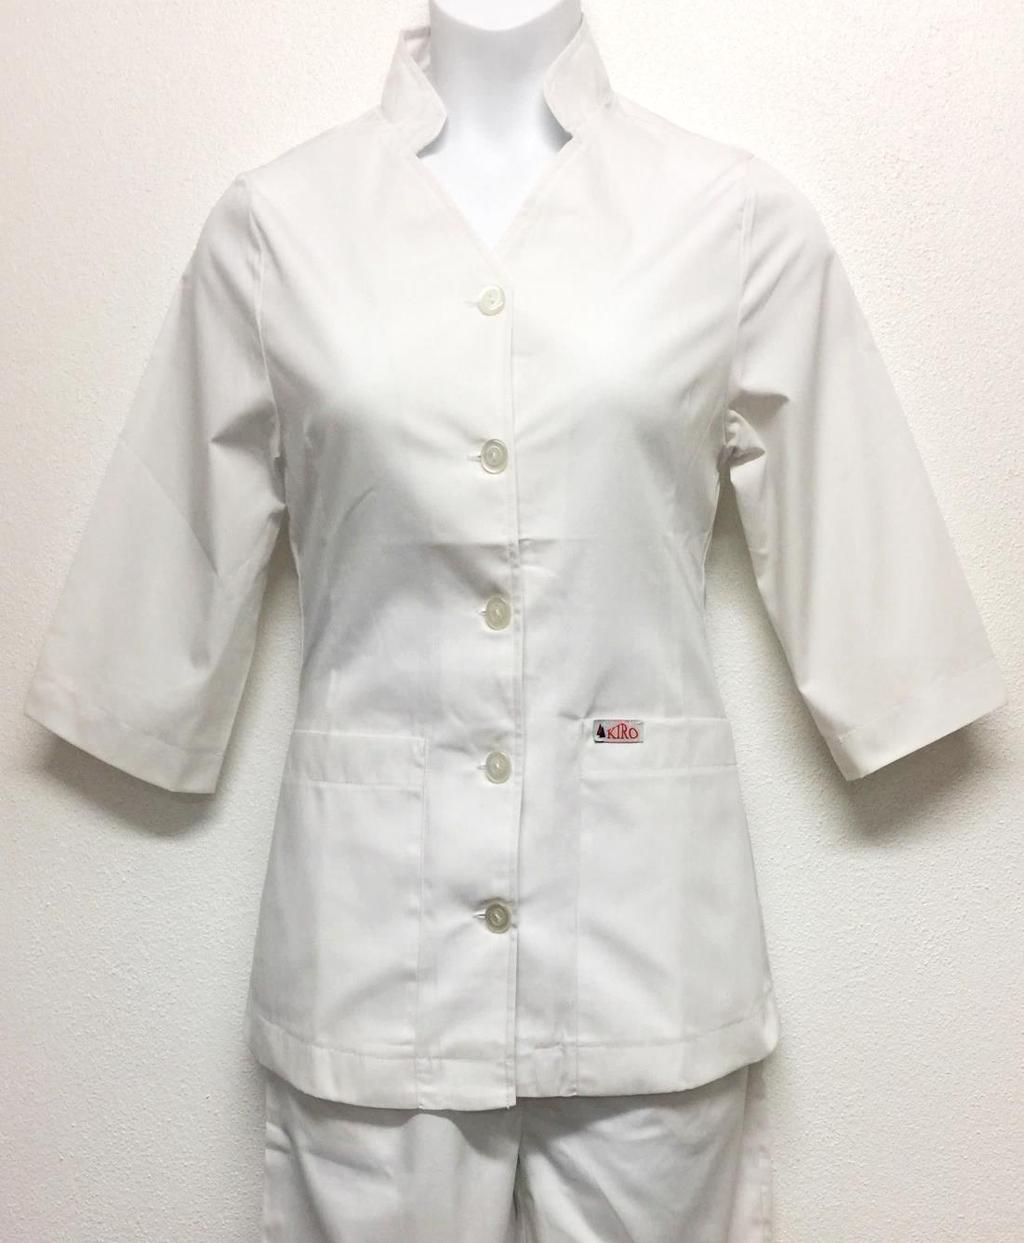 Style: NS622 White Nurse Uniforms 3/4 Sleeve Length